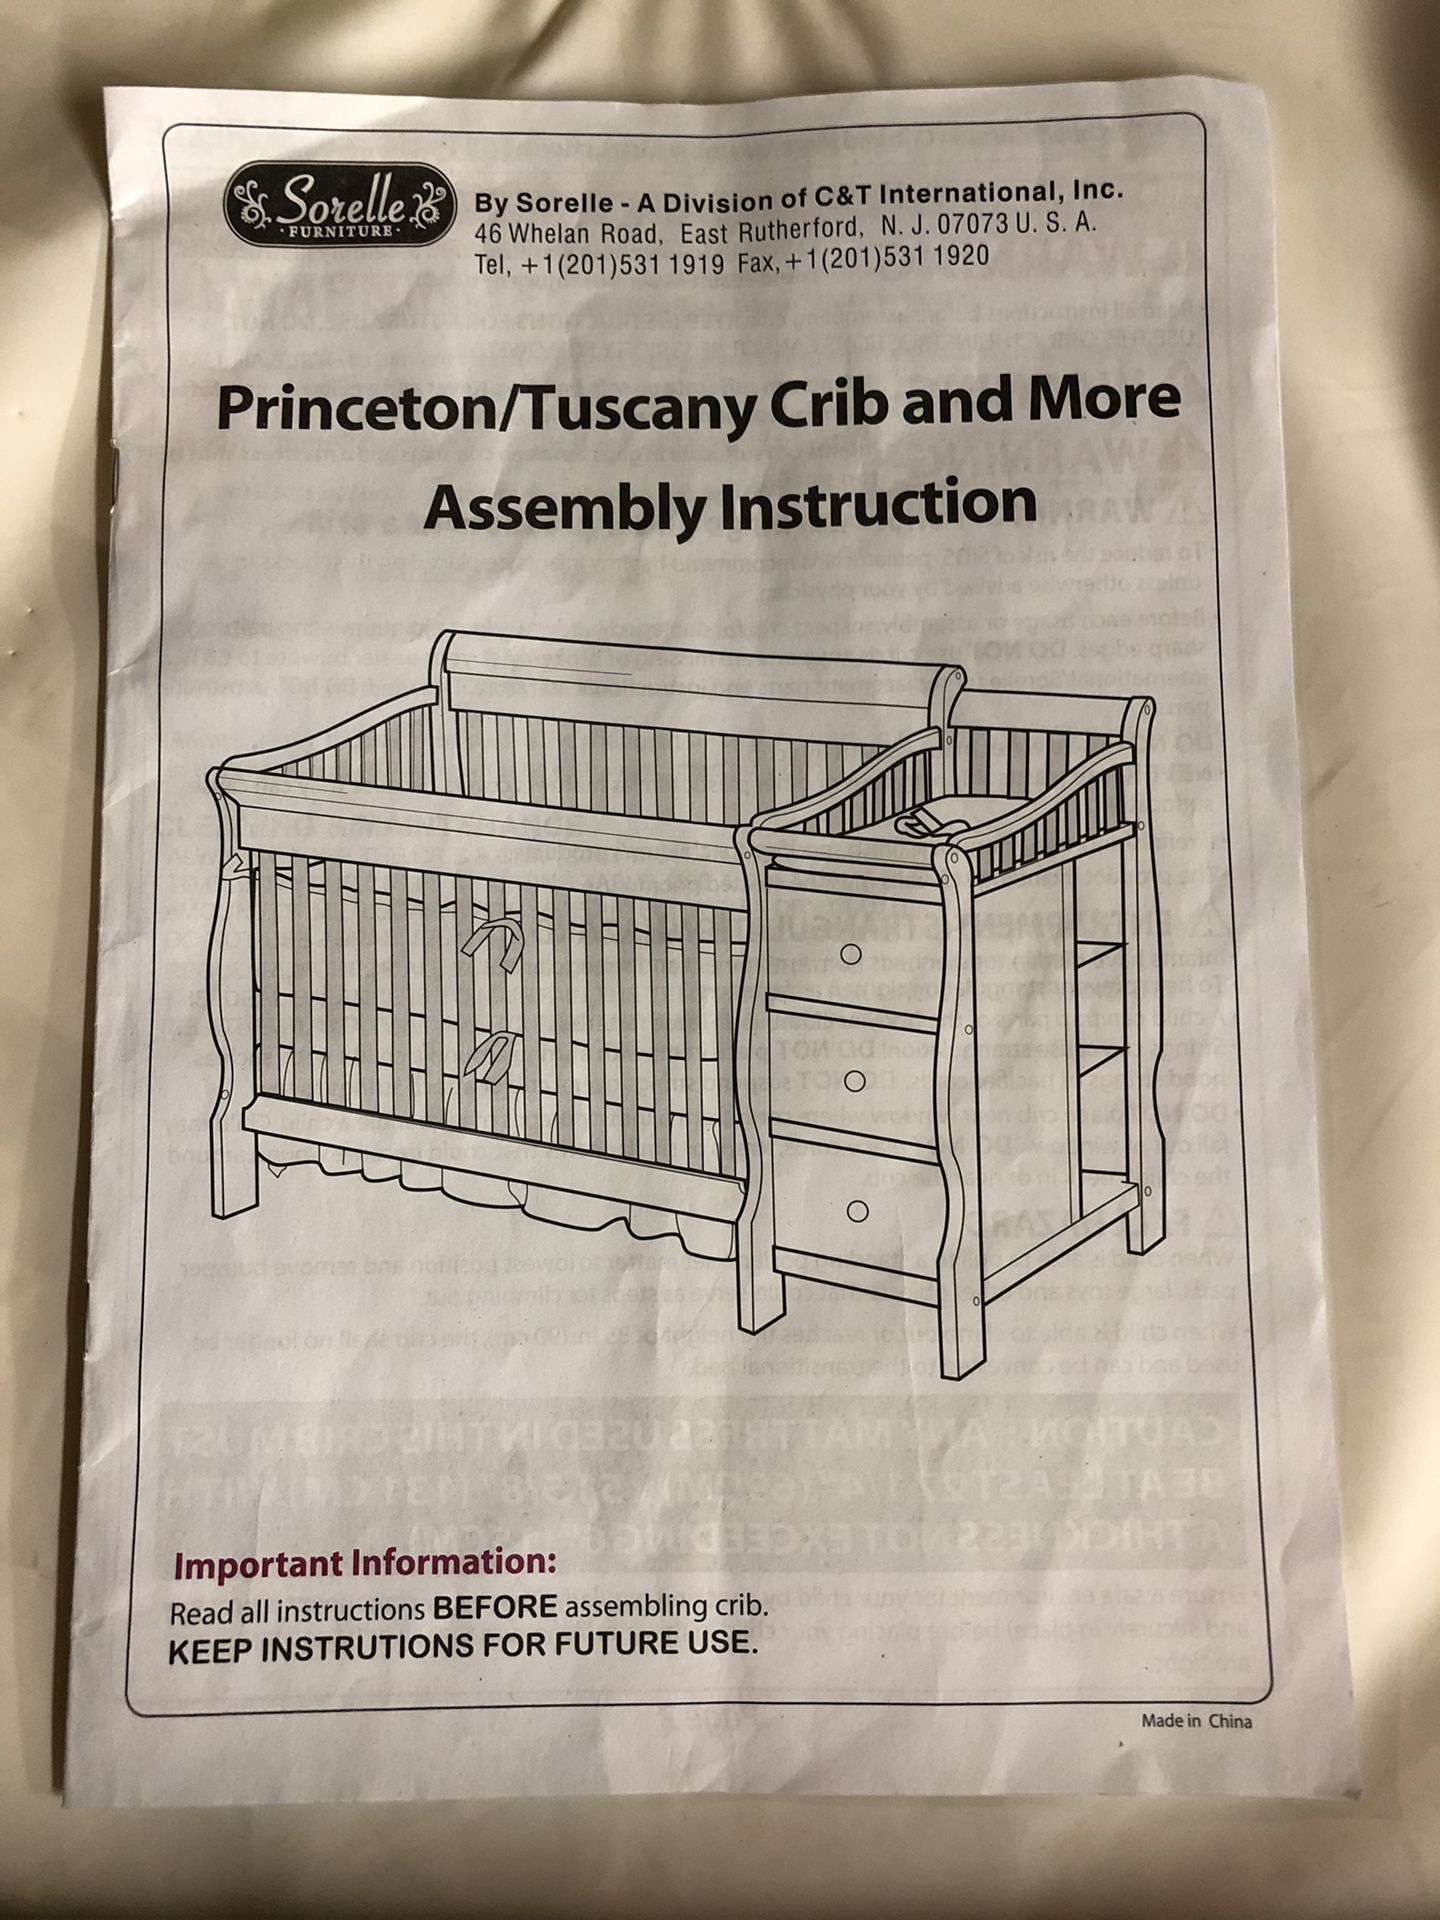 Princeton/Tuscany crib and more by Sorelle